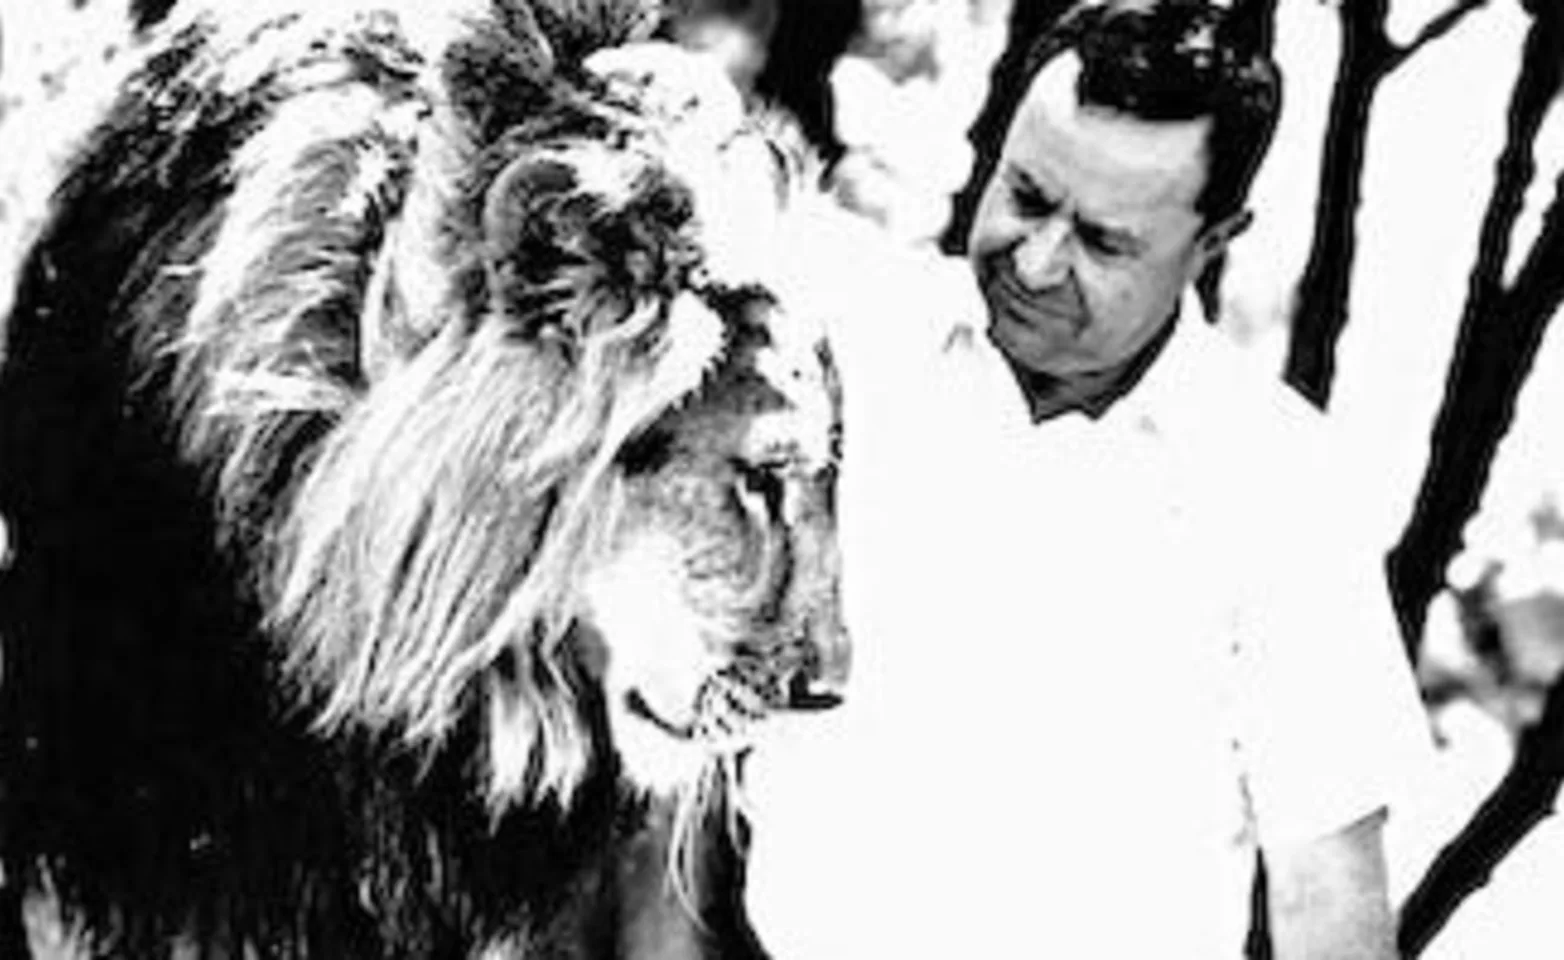 Dr. Robert Miller with a Lion